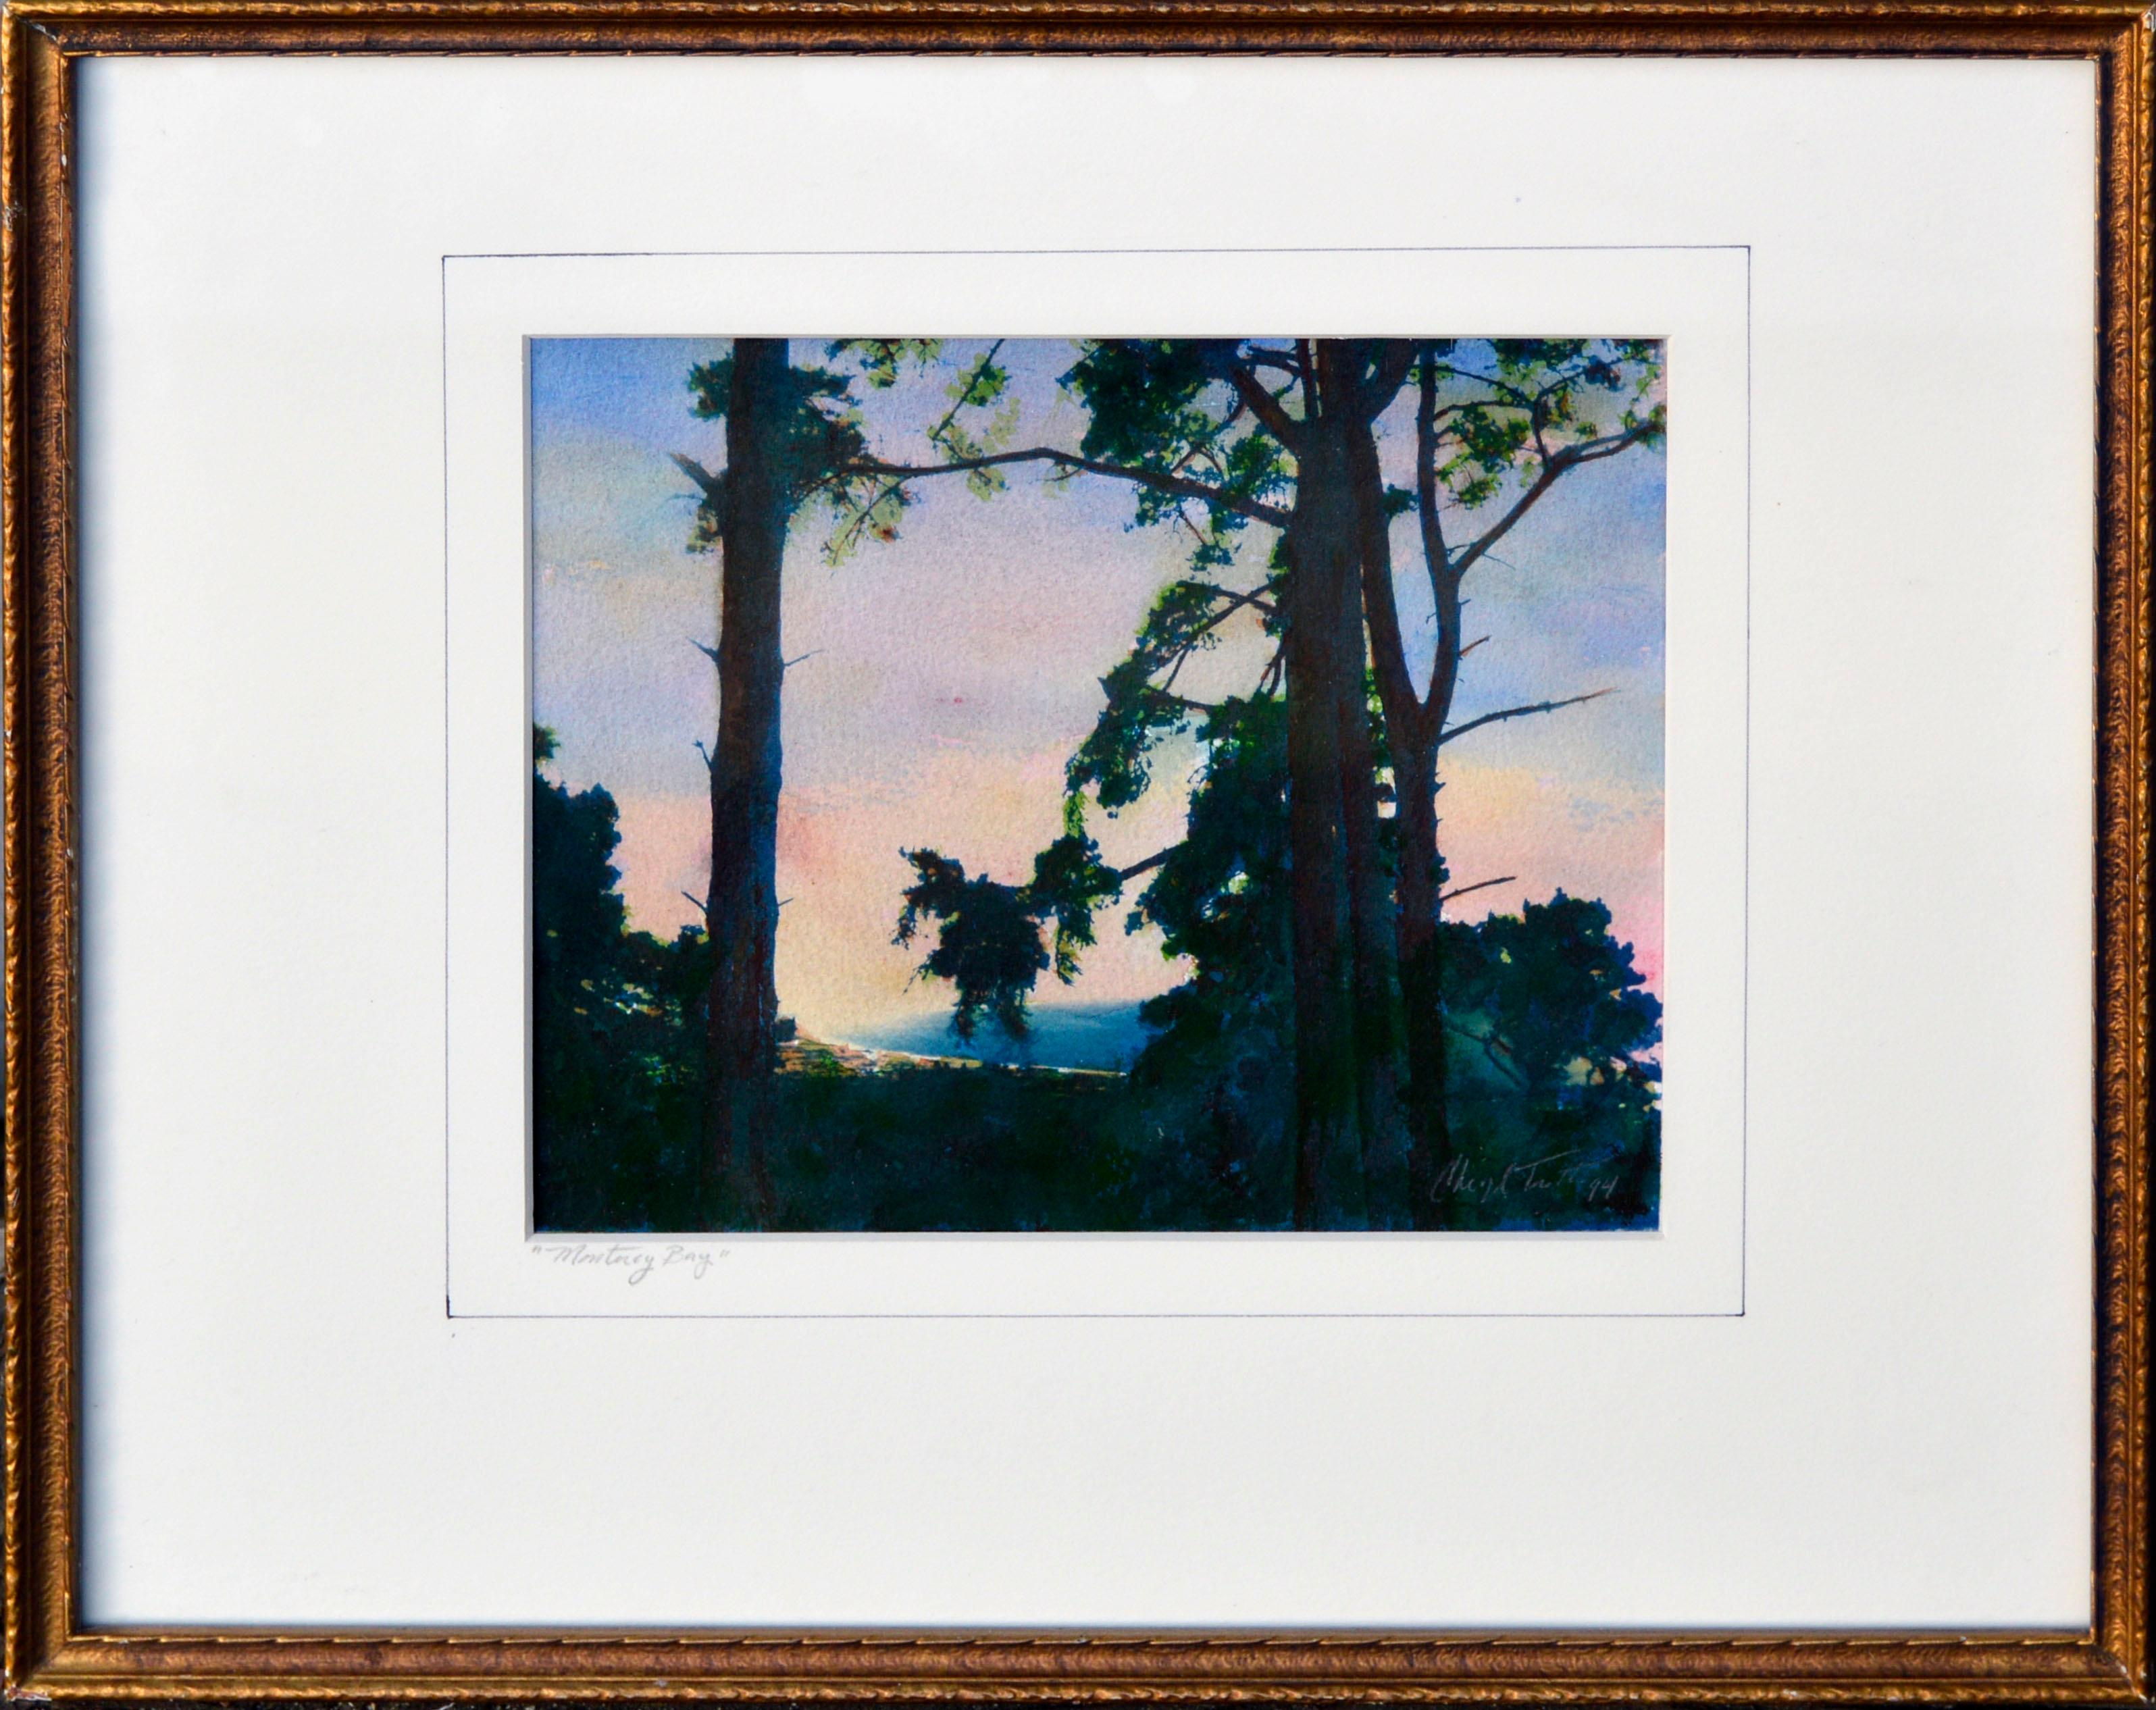 Cheryl Trotter Landscape Photograph - "Monterey Bay" - California Coastal Trees, Cyanotype / Watercolor Landscape